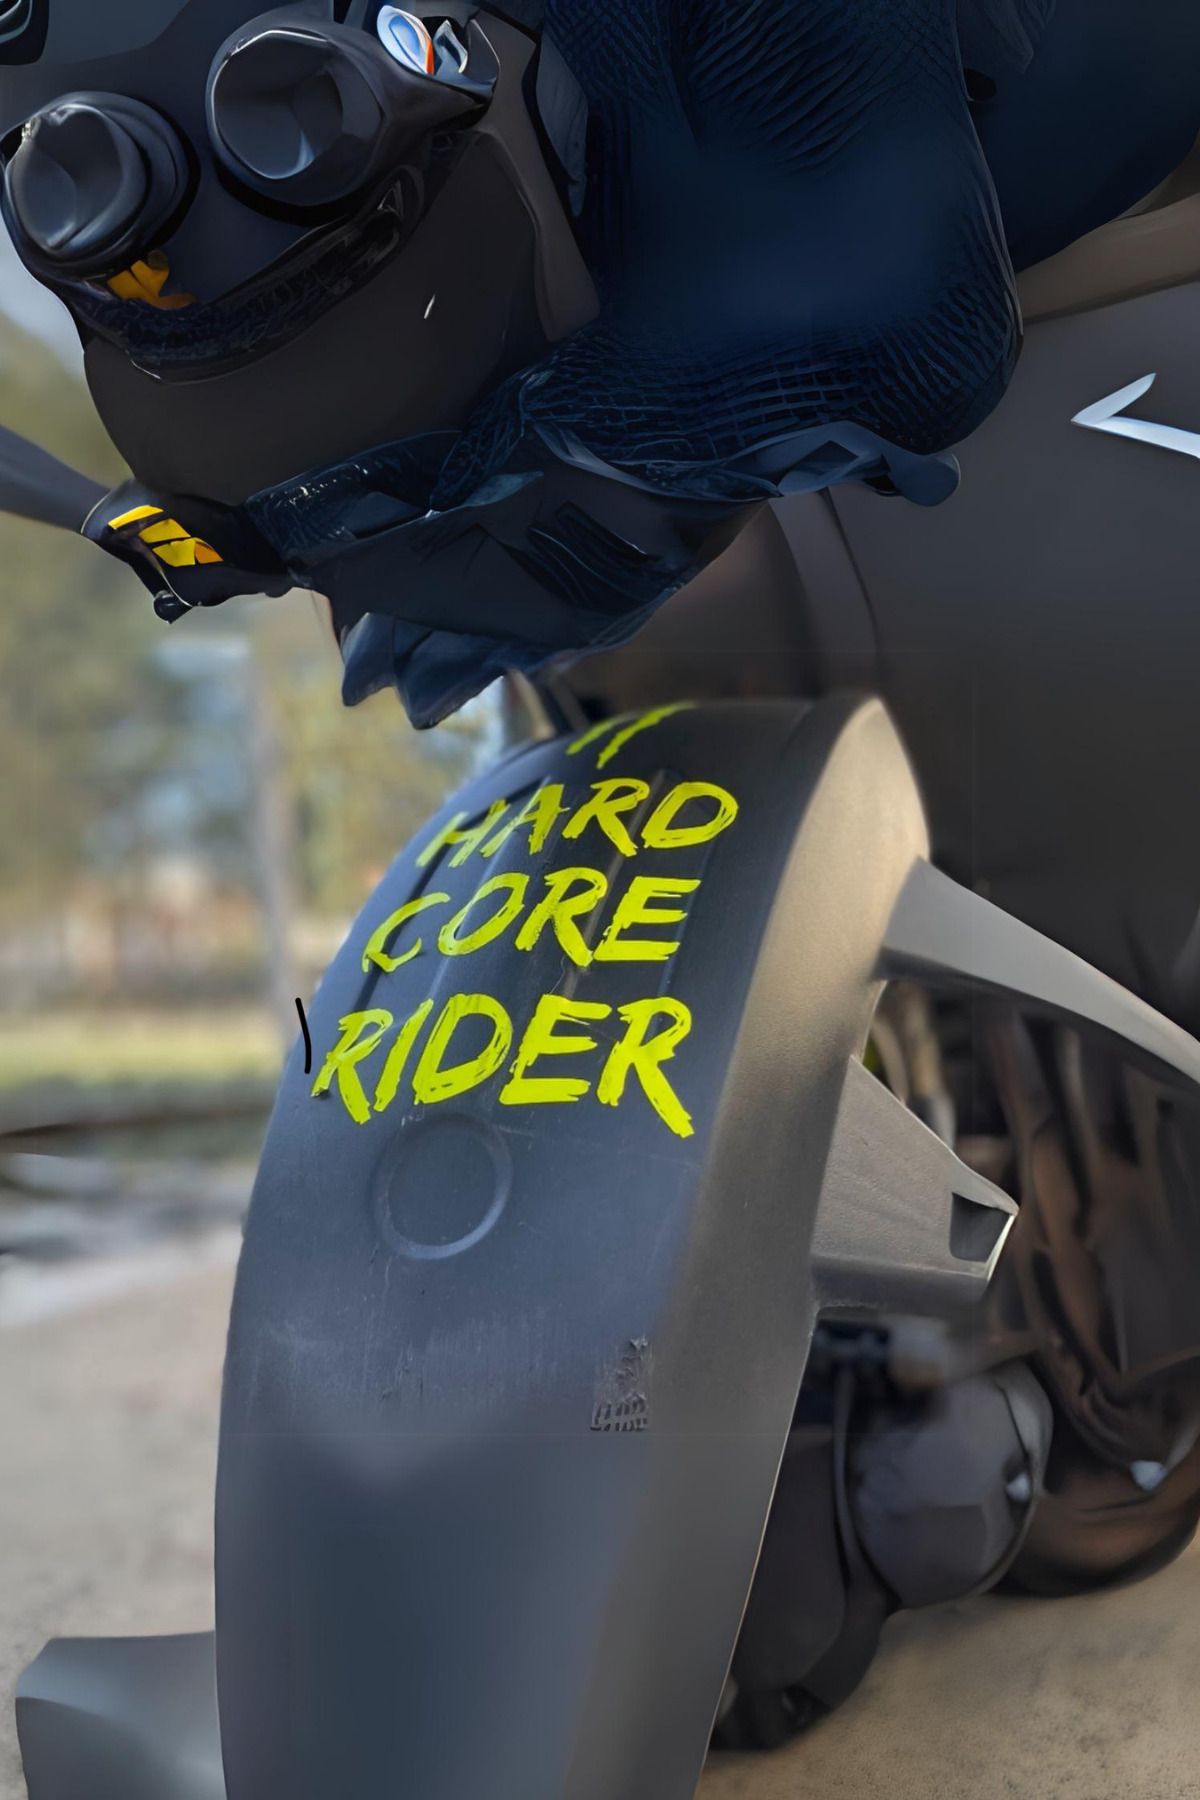 Banxtre Dekoratif Parlak Neon Sarı Hard Core Rider Motor-araba Sticker Etiket 15x12cm (1 ADET)